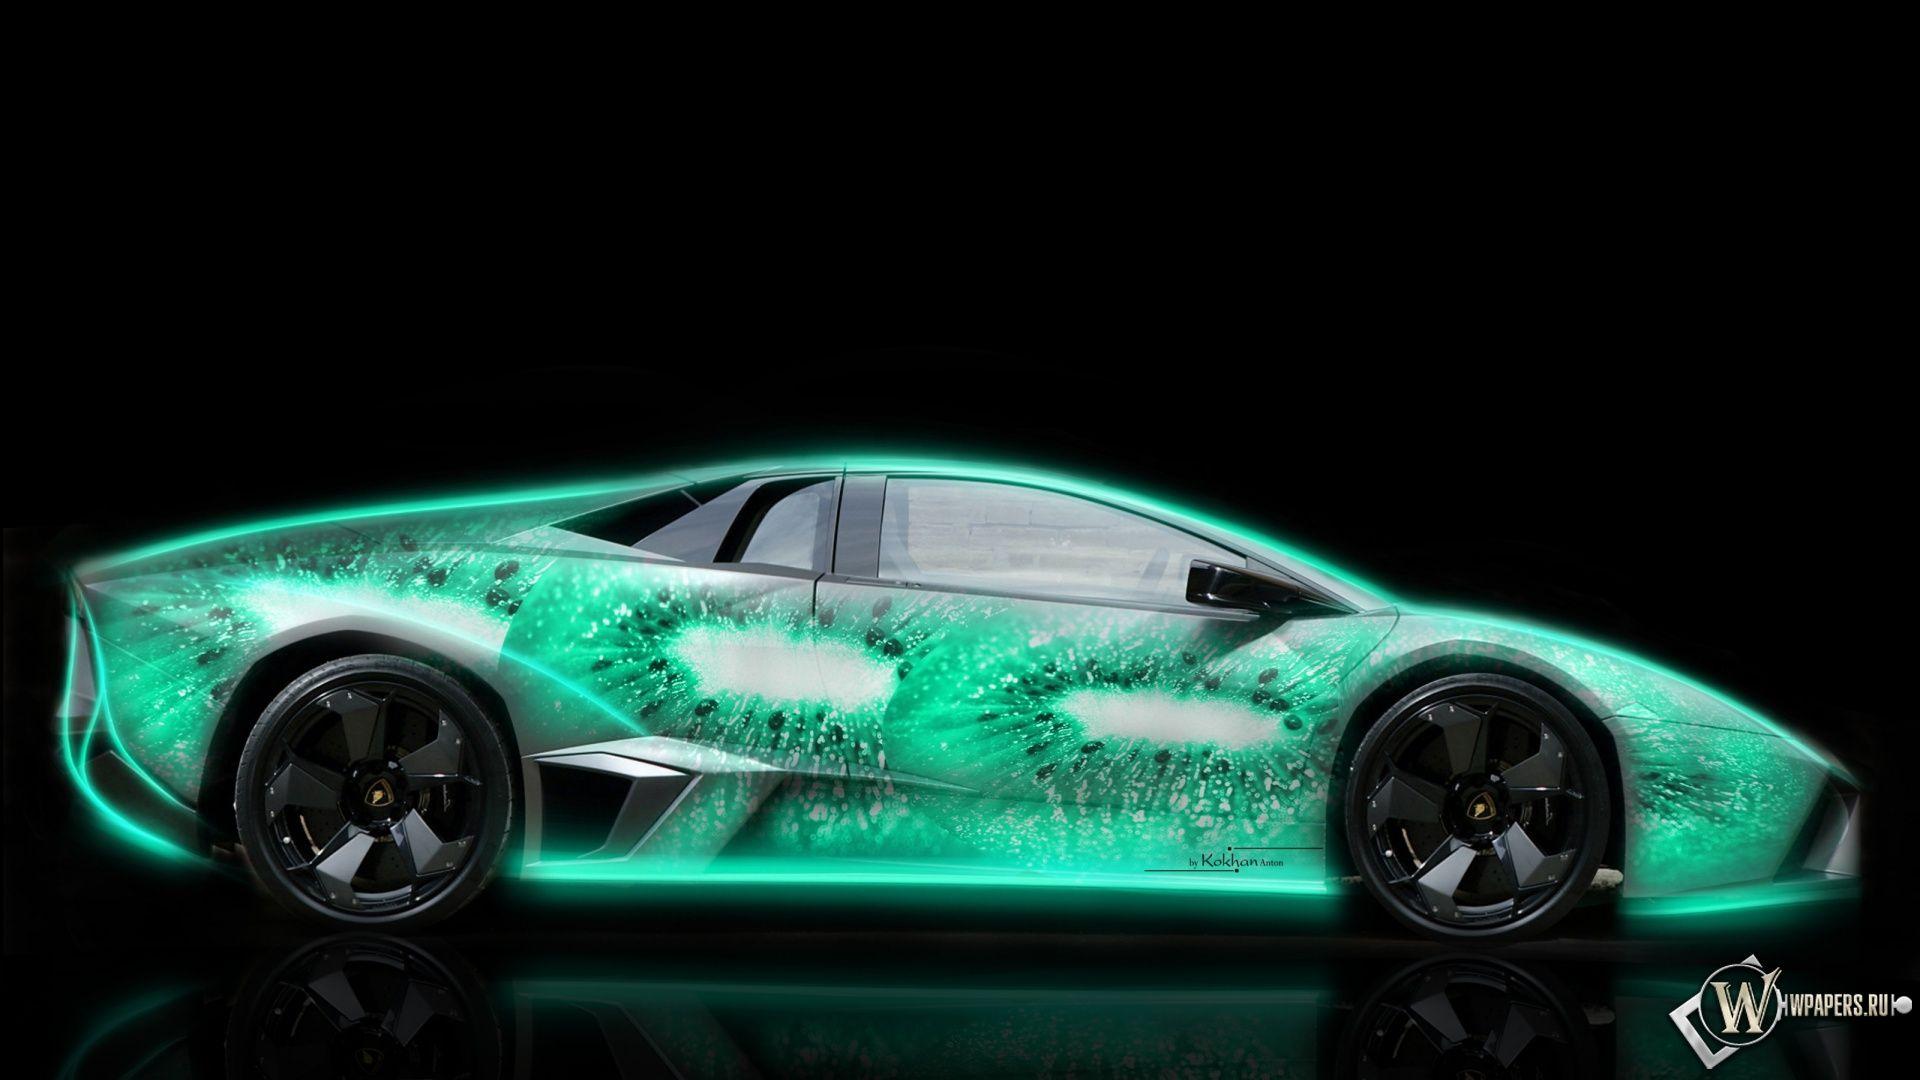 Lamborghini With Neon Lights And Flames: Lamborghini gallardo